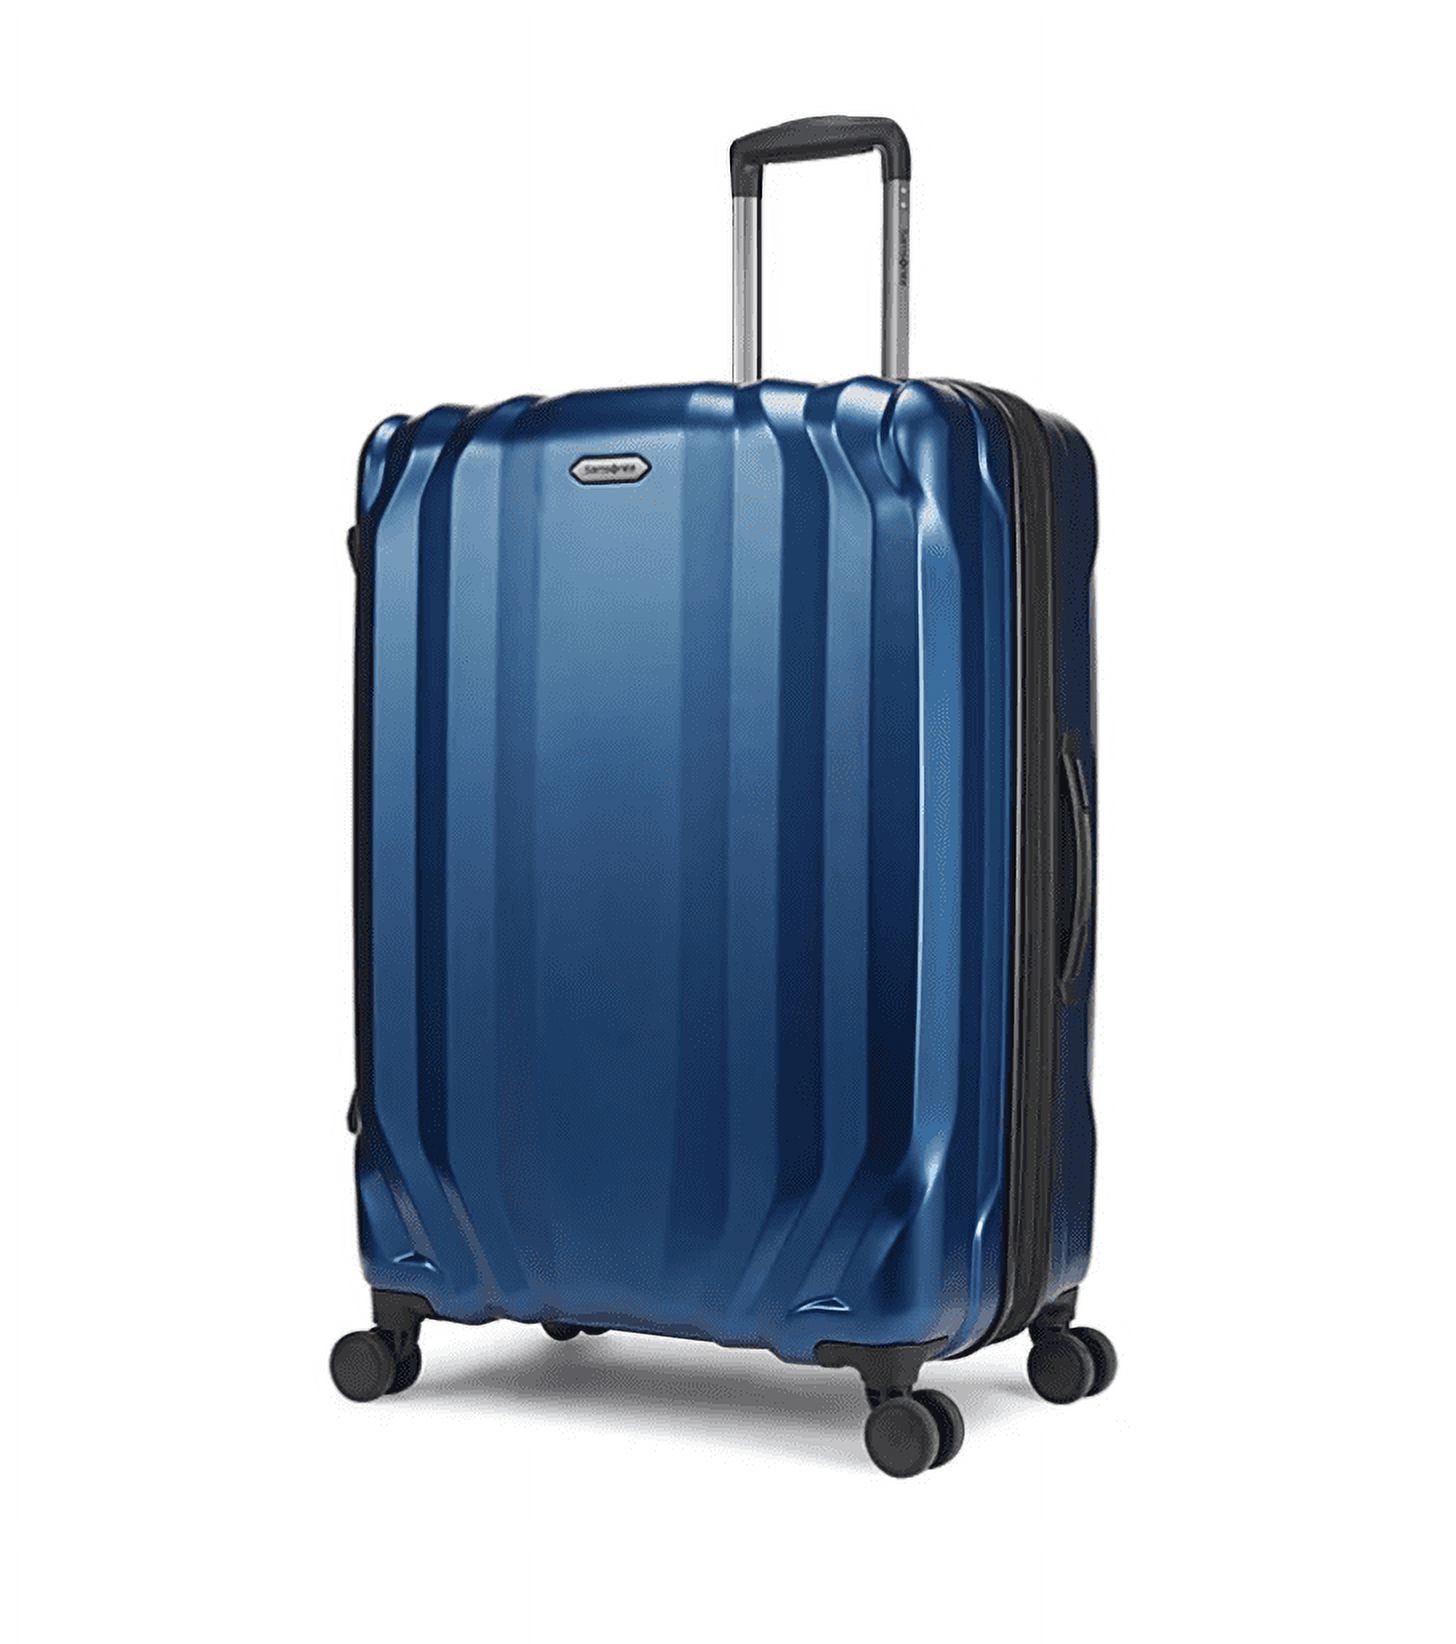 Samsonite 134852-1153 Volante Hardside Spinner Luggage 2-Piece Set blue - image 2 of 2